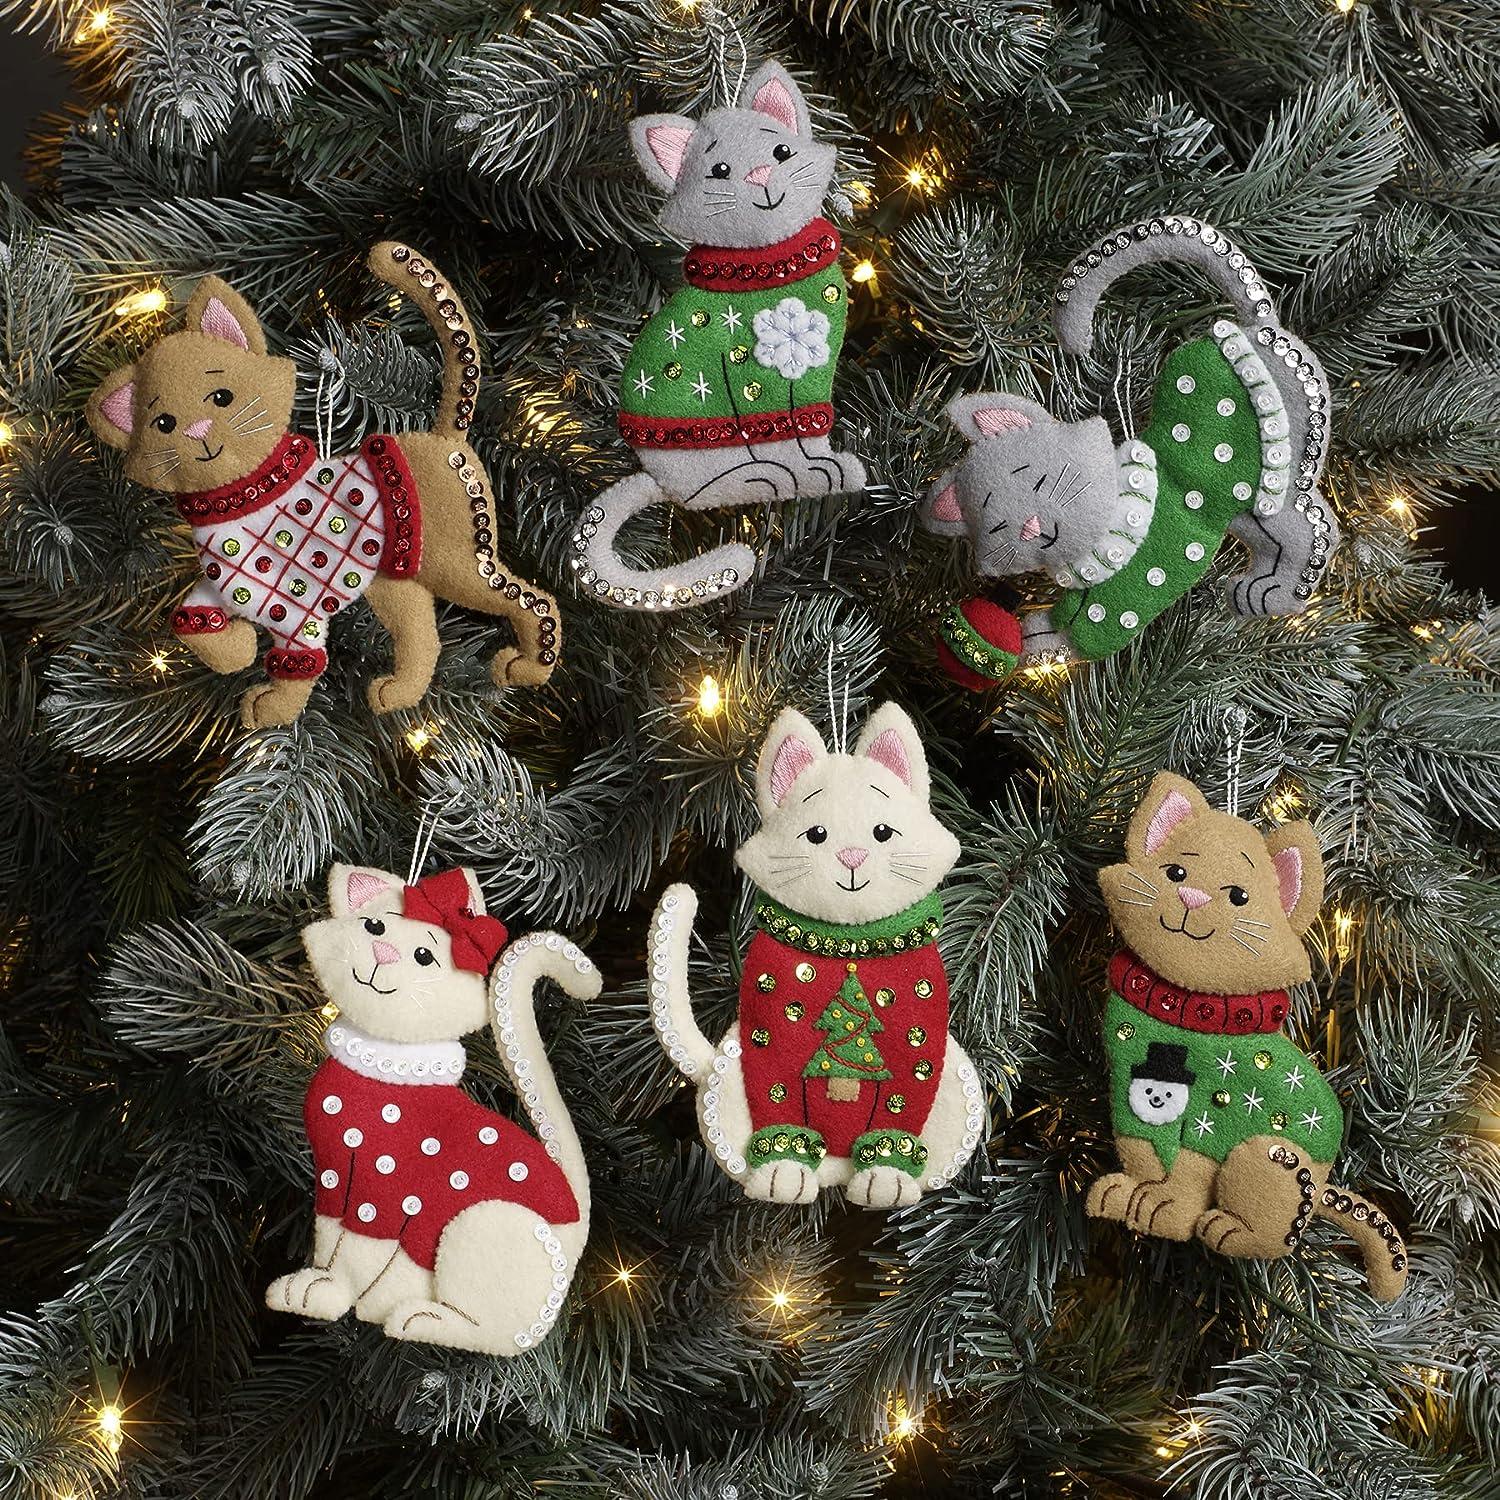 Bucilla Felt Ornament KIT SWEATR Cats in Ugly Sweaters (89381E)